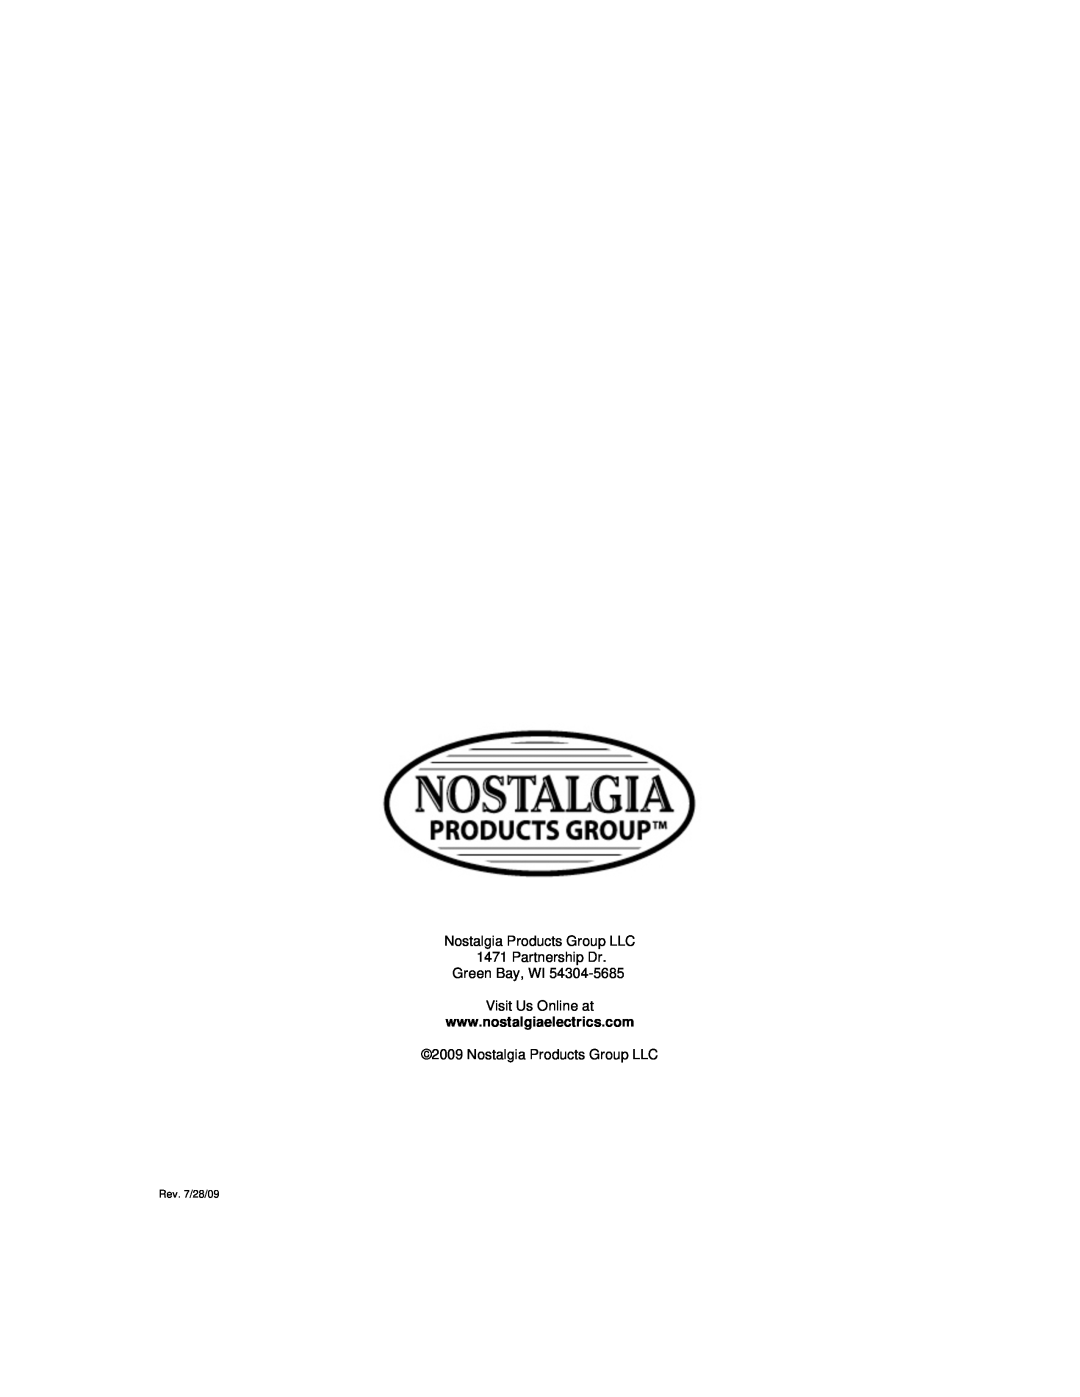 Nostalgia Electrics RFH-900 manual Nostalgia Products Group LLC 1471 Partnership Dr, Green Bay, WI Visit Us Online at 